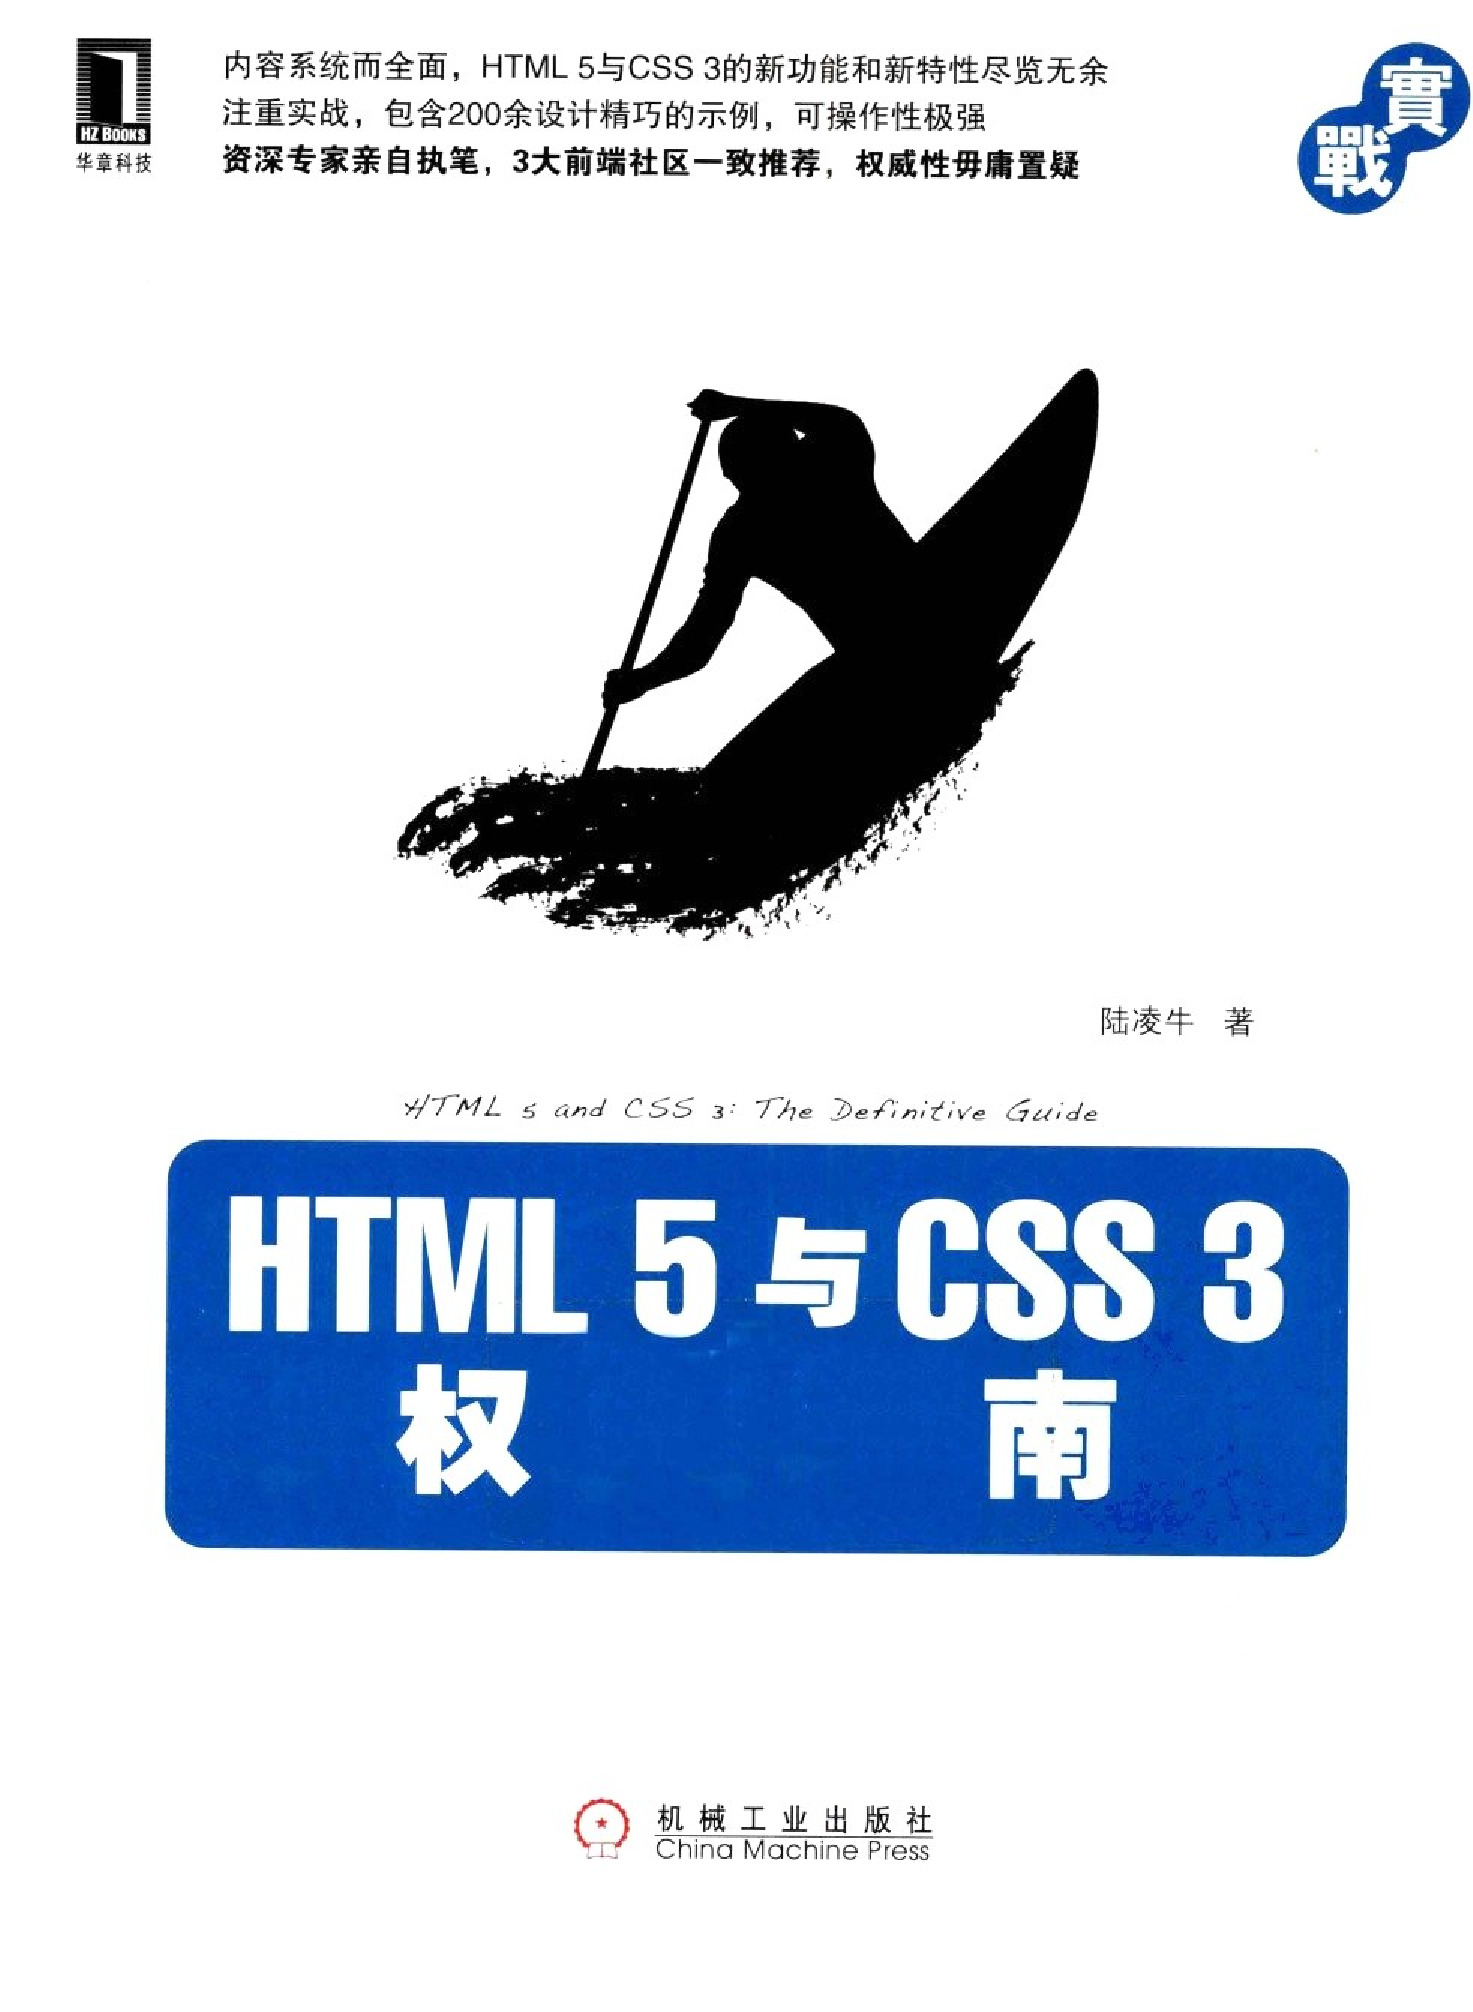 HTML5与CSS3权威指南完整版